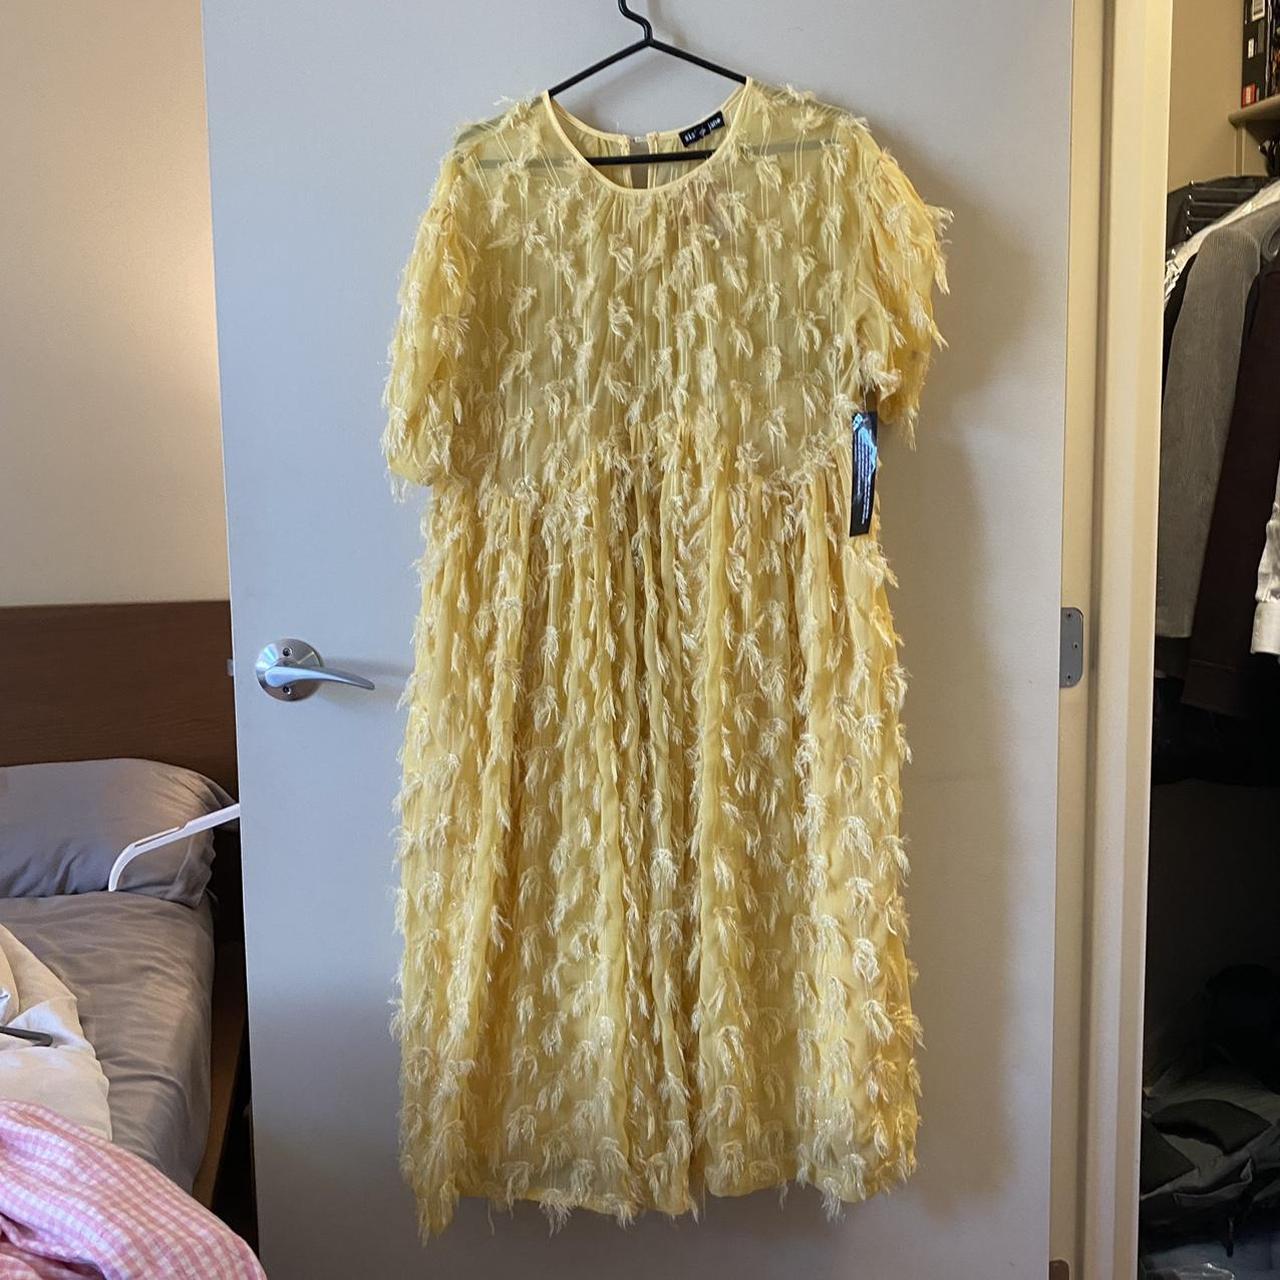 Product Image 1 - Sister Jane Yellow Dress
Brand new